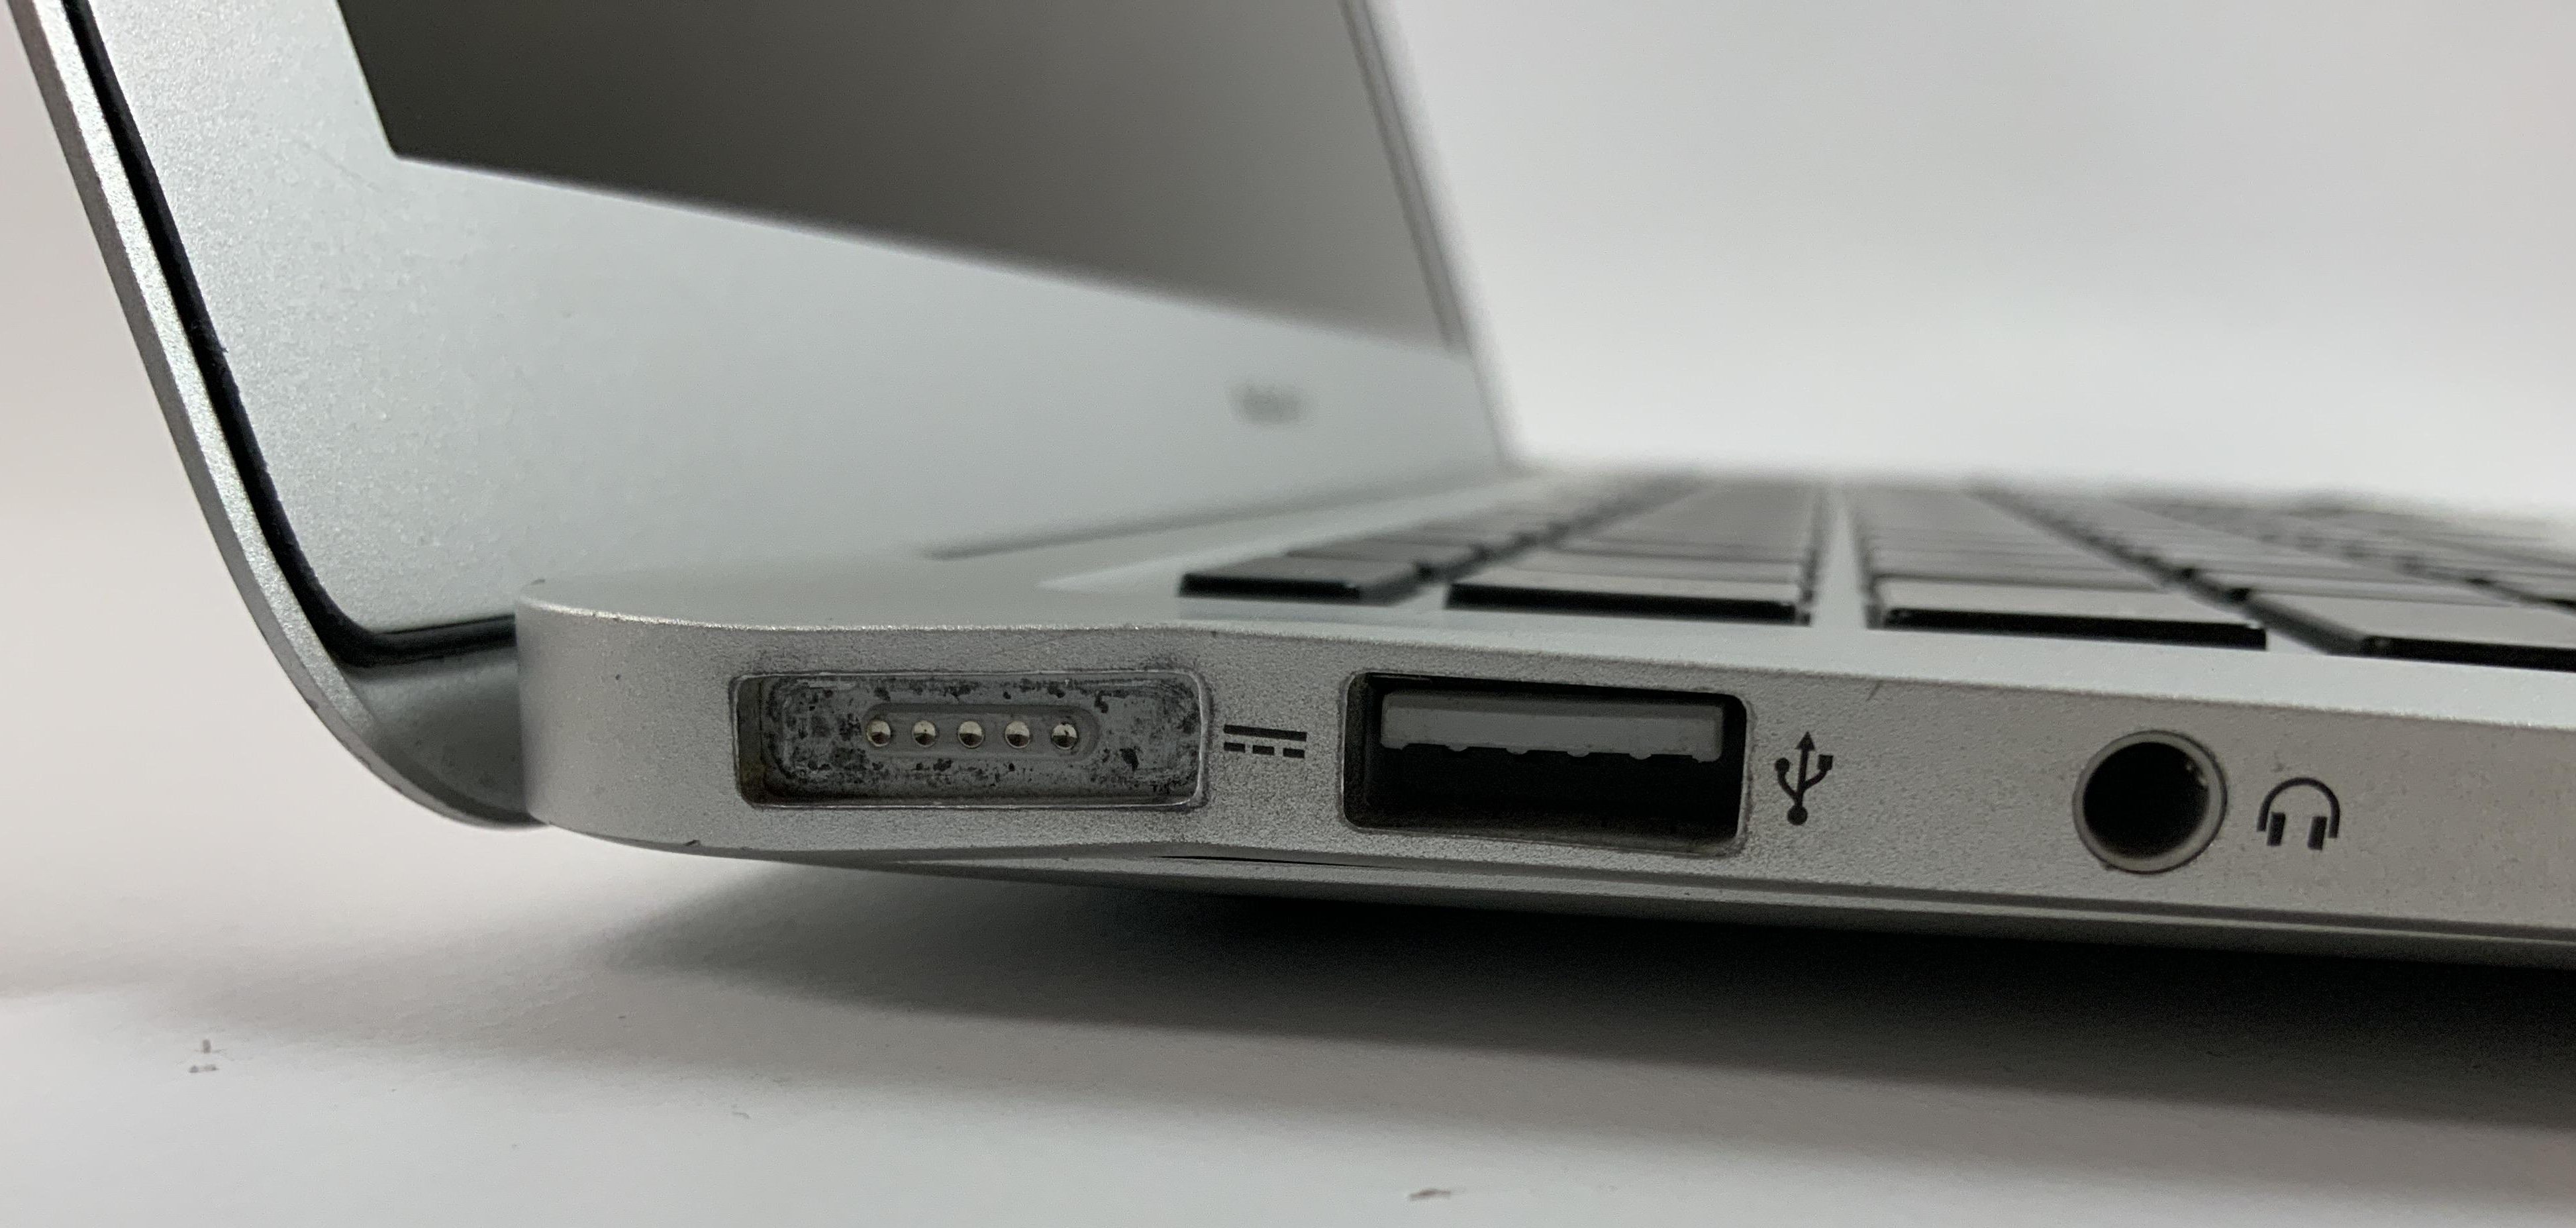 MacBook Air 13" Early 2015 (Intel Core i5 1.6 GHz 4 GB RAM 128 GB SSD), Intel Core i5 1.6 GHz, 4 GB RAM, 128 GB SSD, imagen 2